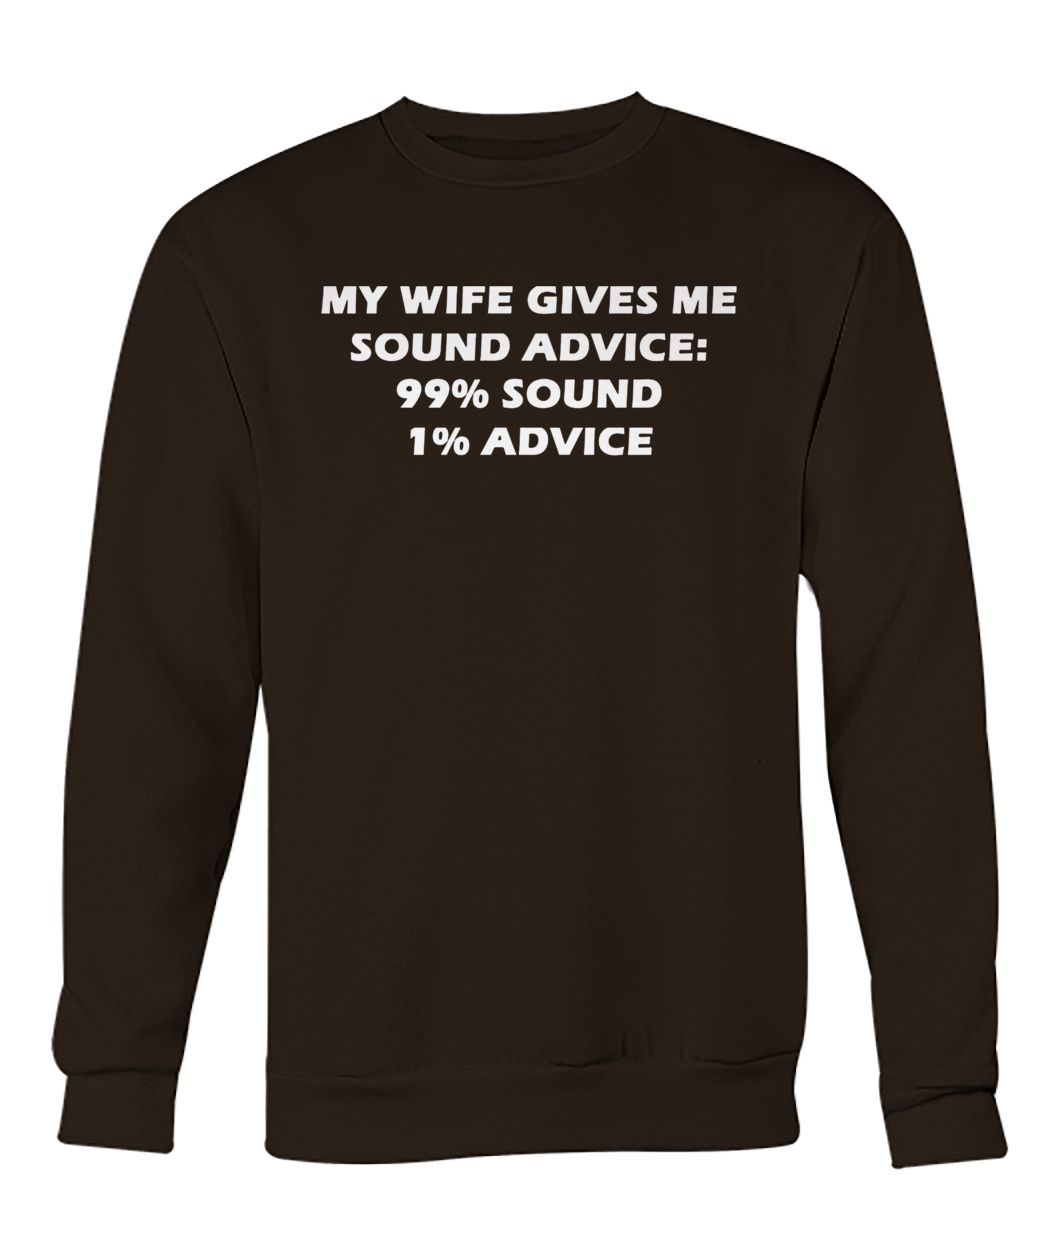 My wife gives me sound advice 99% sound 1% advice crew neck sweatshirt